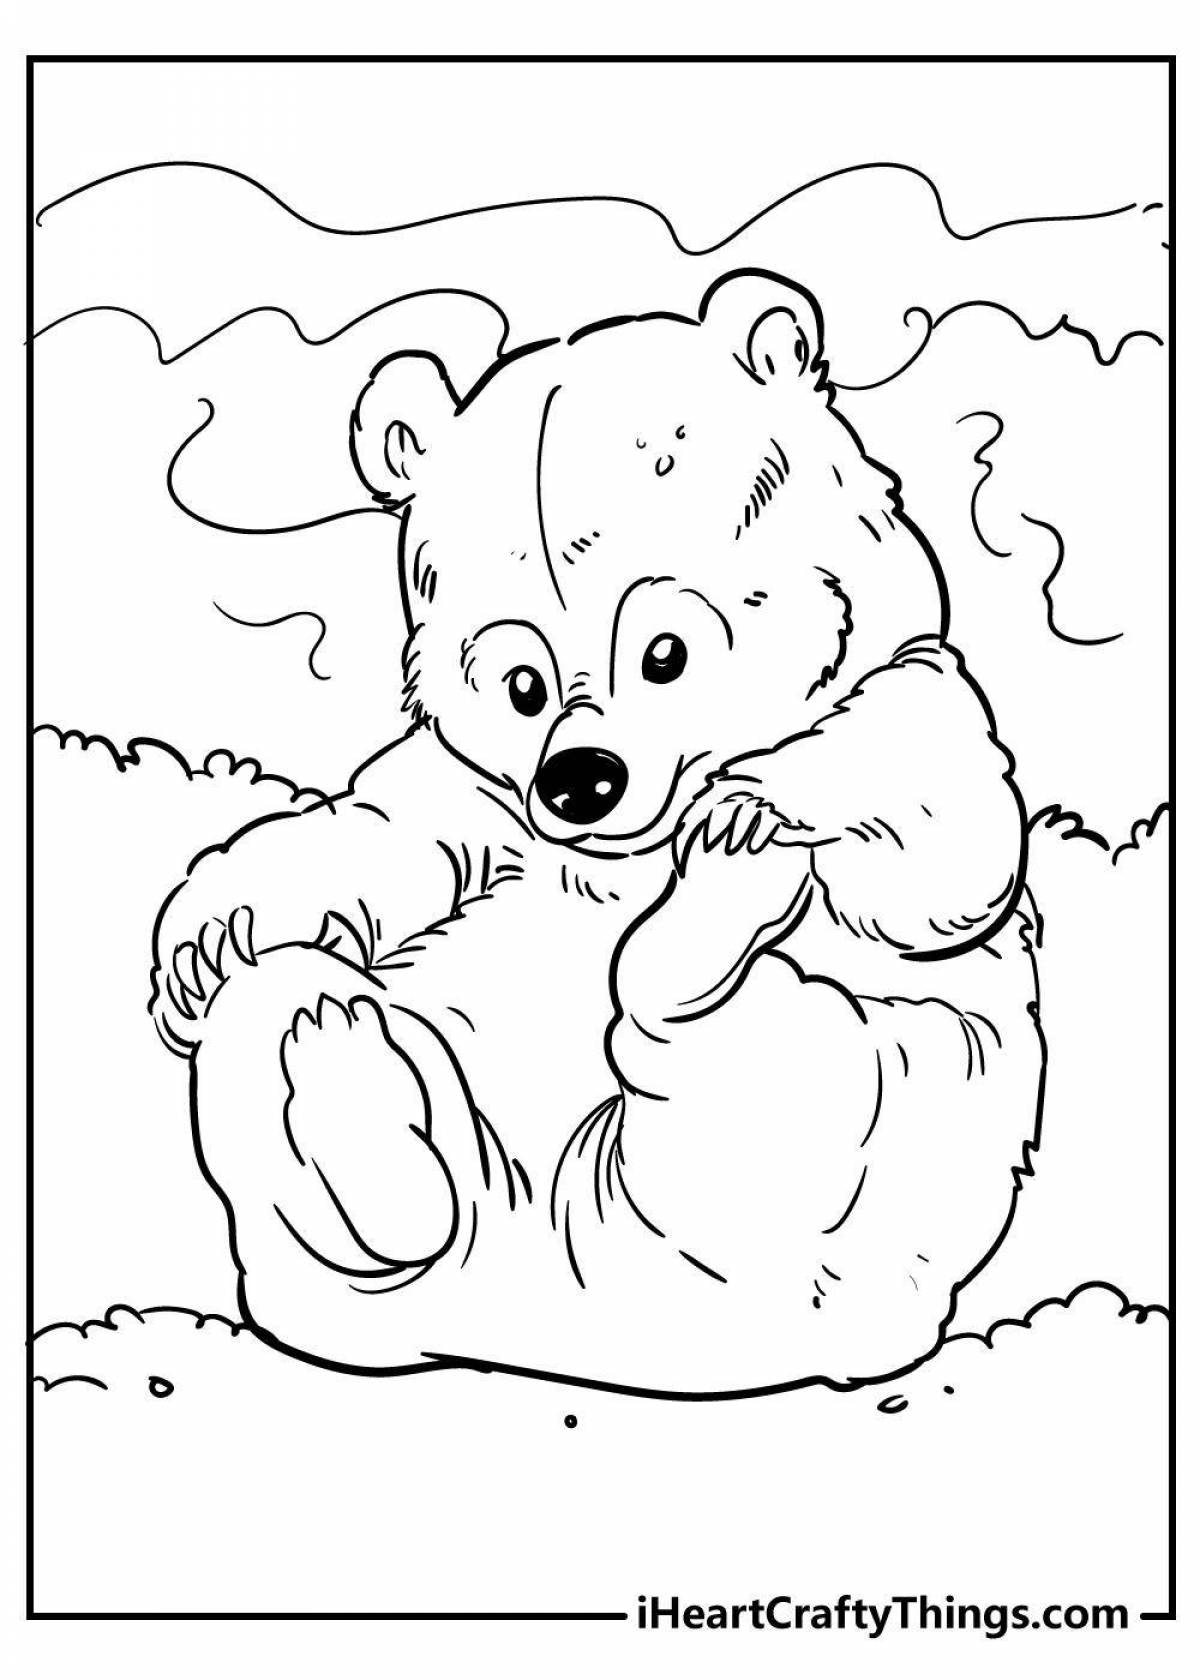 Раскраска обнимающийся медведь на севере